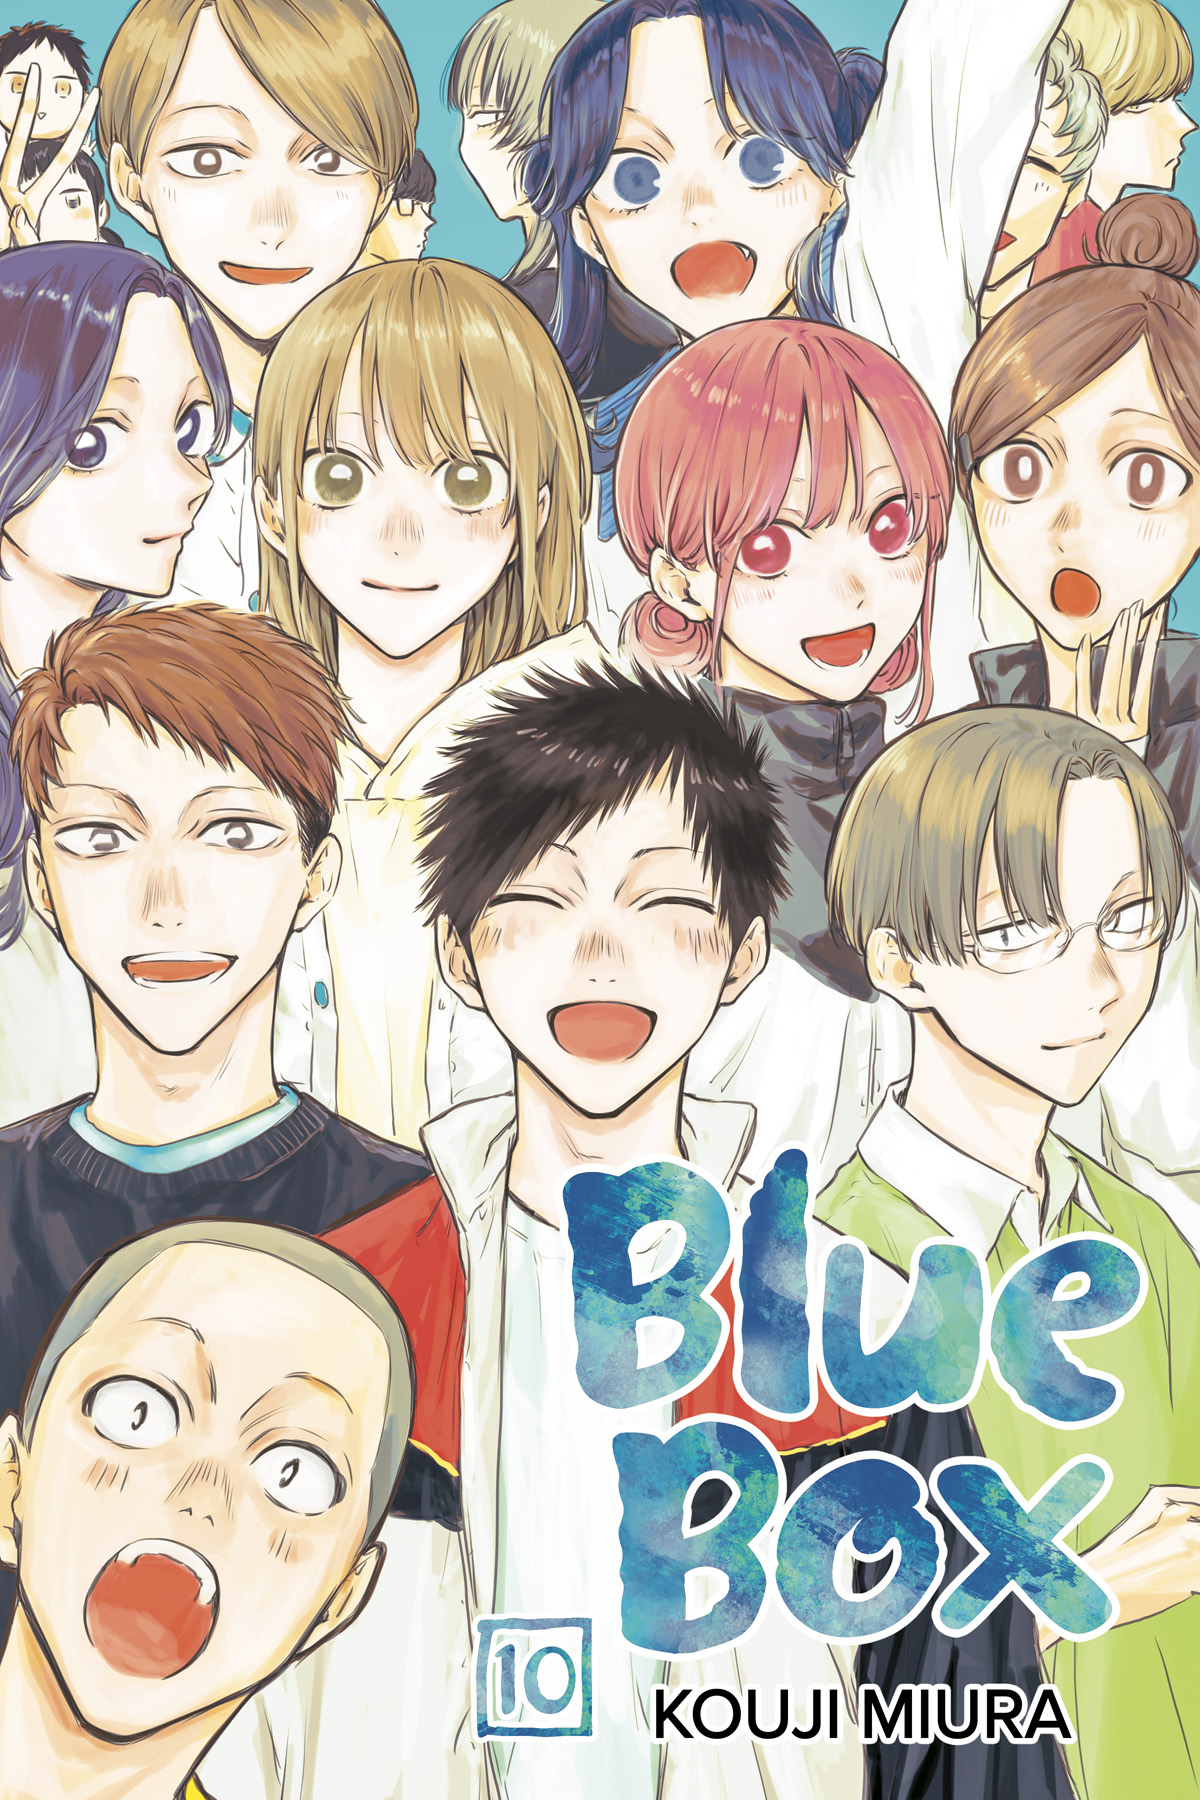 Blue Box Manga Volume 10